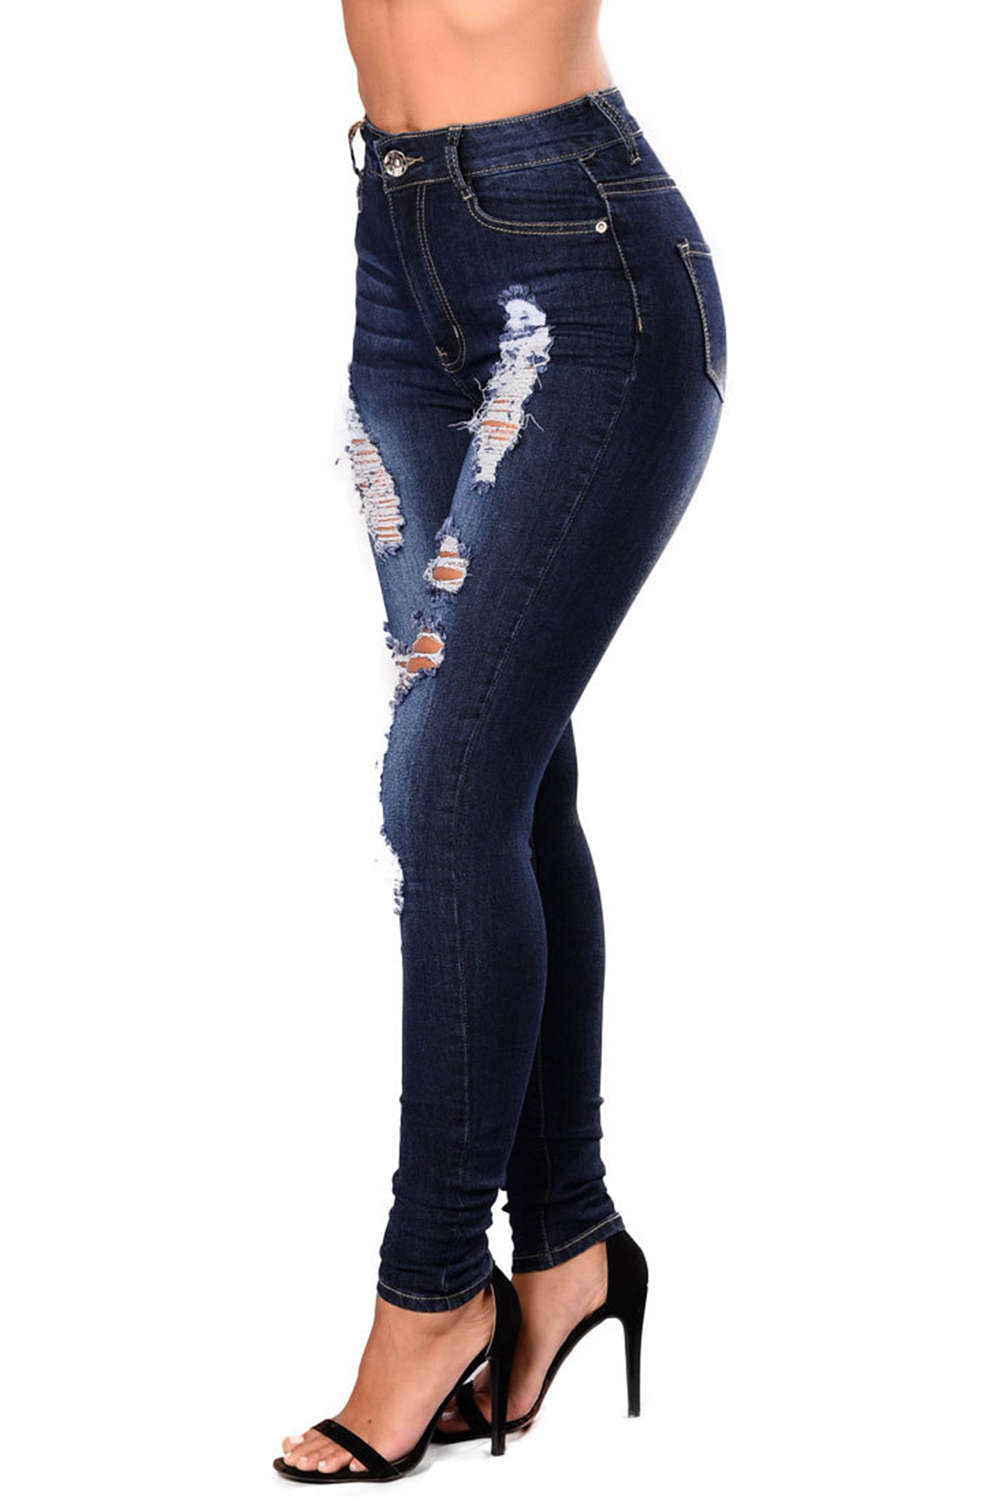 Iyasson Women's Ripped Slim Long Jeans Pants